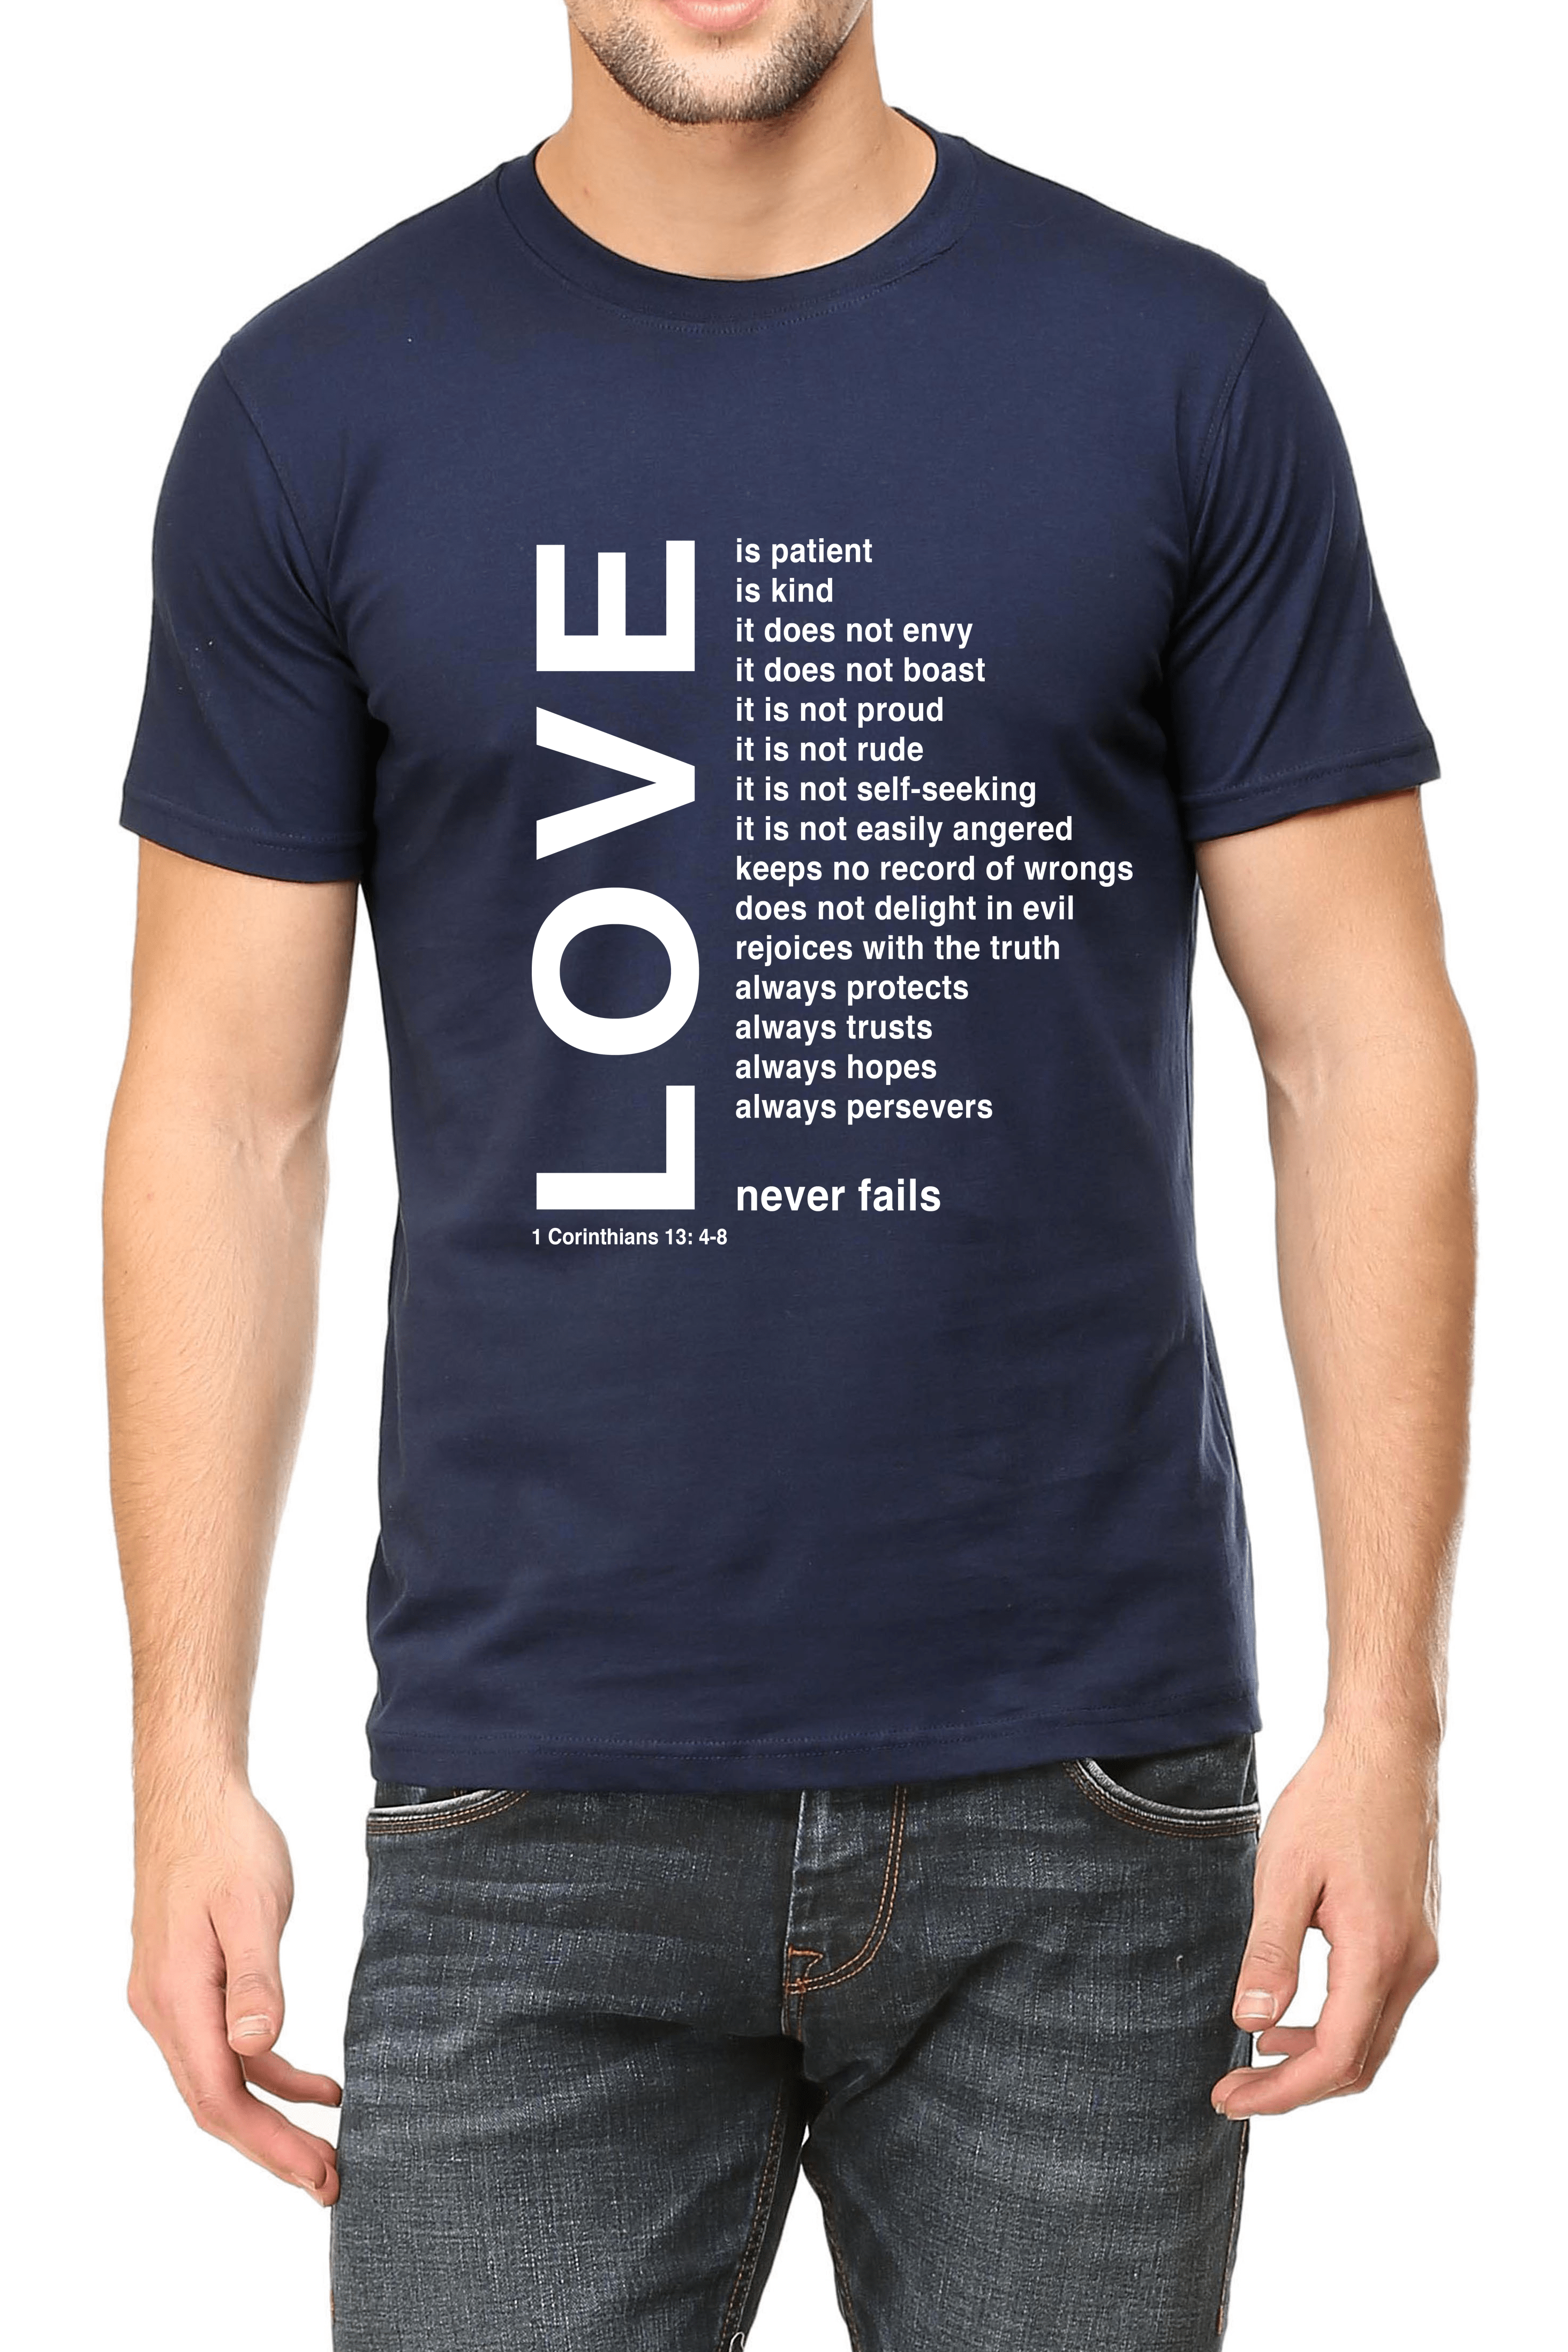 Living Words Men Round Neck T Shirt S / Navy Blue Love - Christian T-Shirt